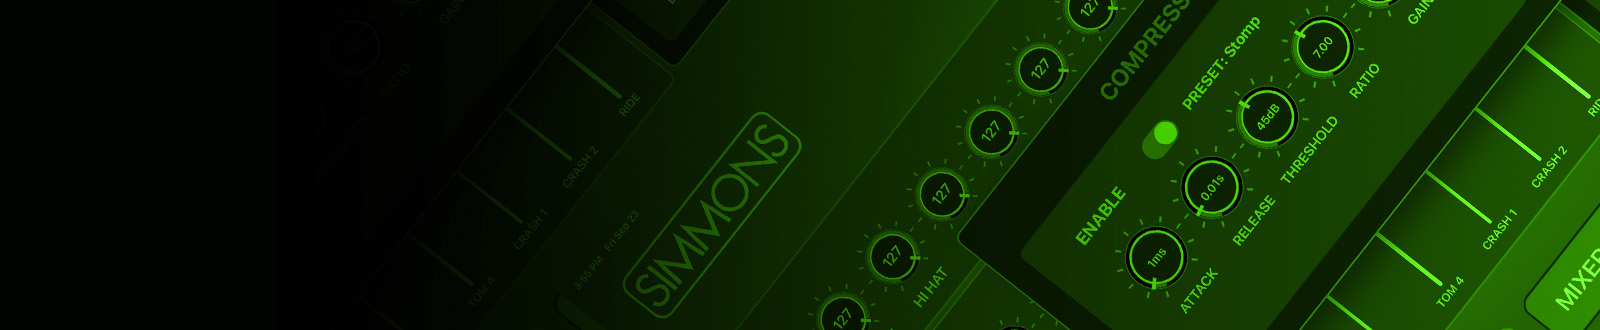 Simmons drum 2 app on Ipad close up